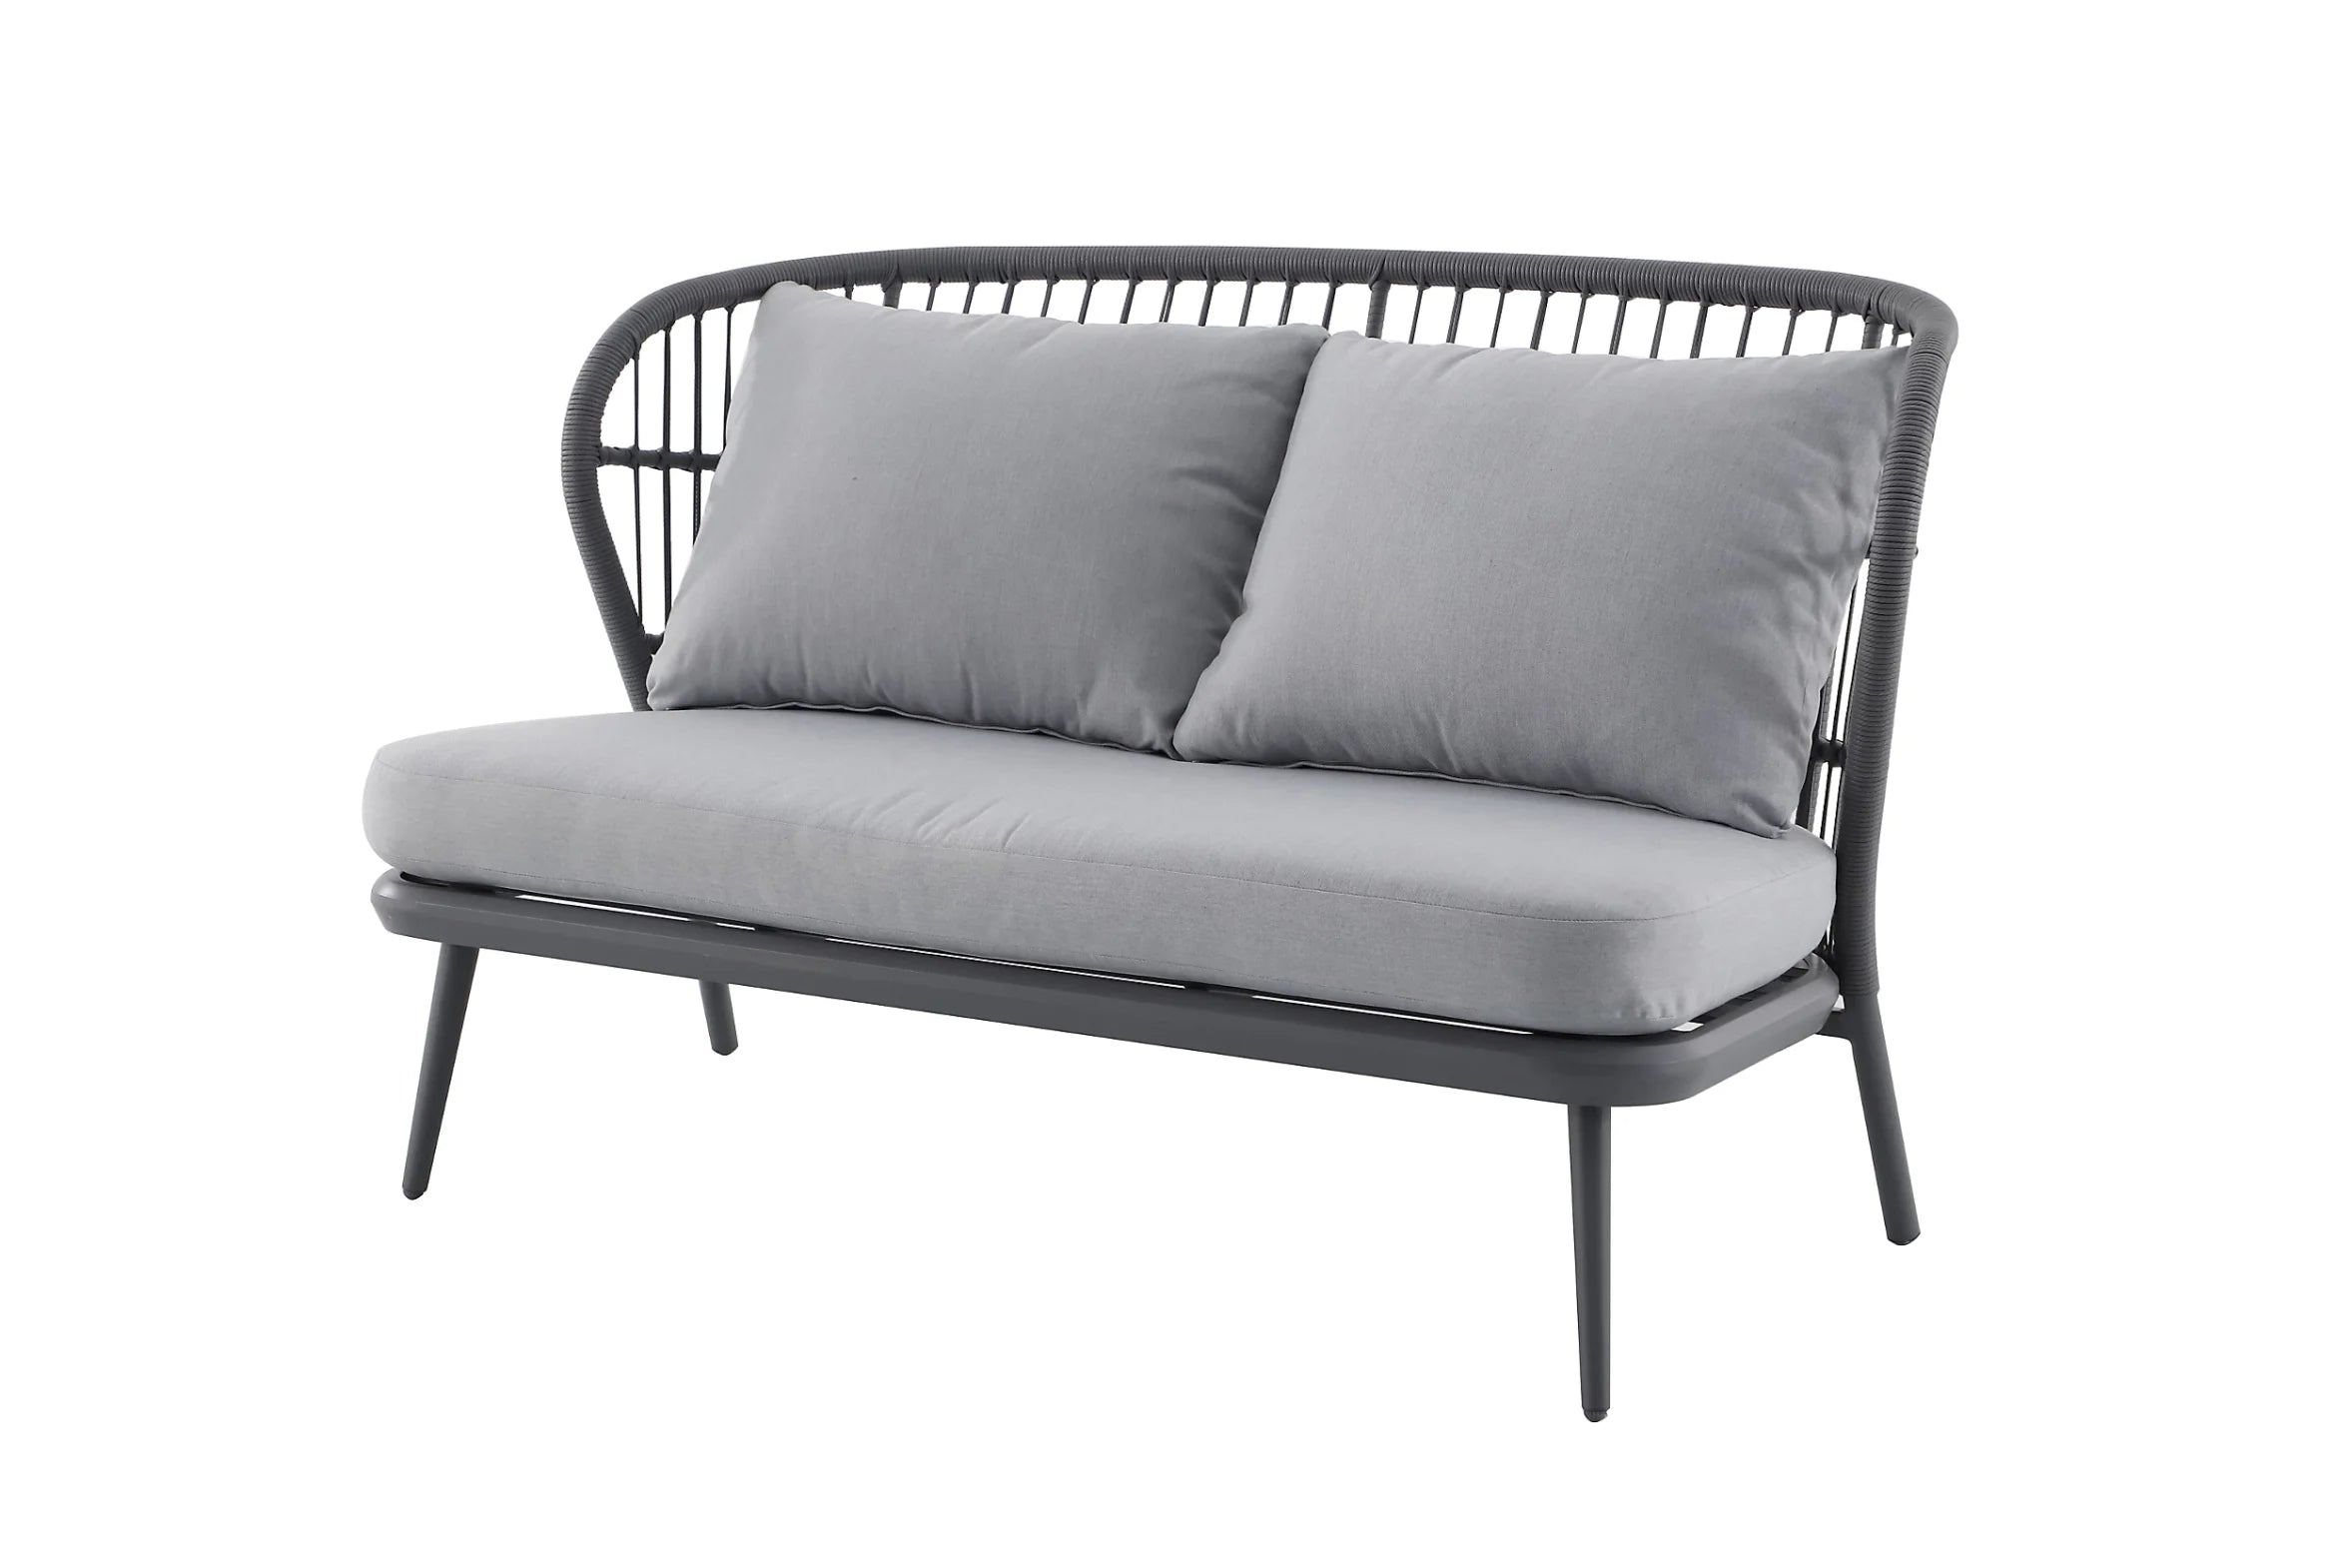 GoodHome Apolima Grey Aluminium 4 Seater Coffee set, Garden furniture set - Rattan Garden Furniture 3516